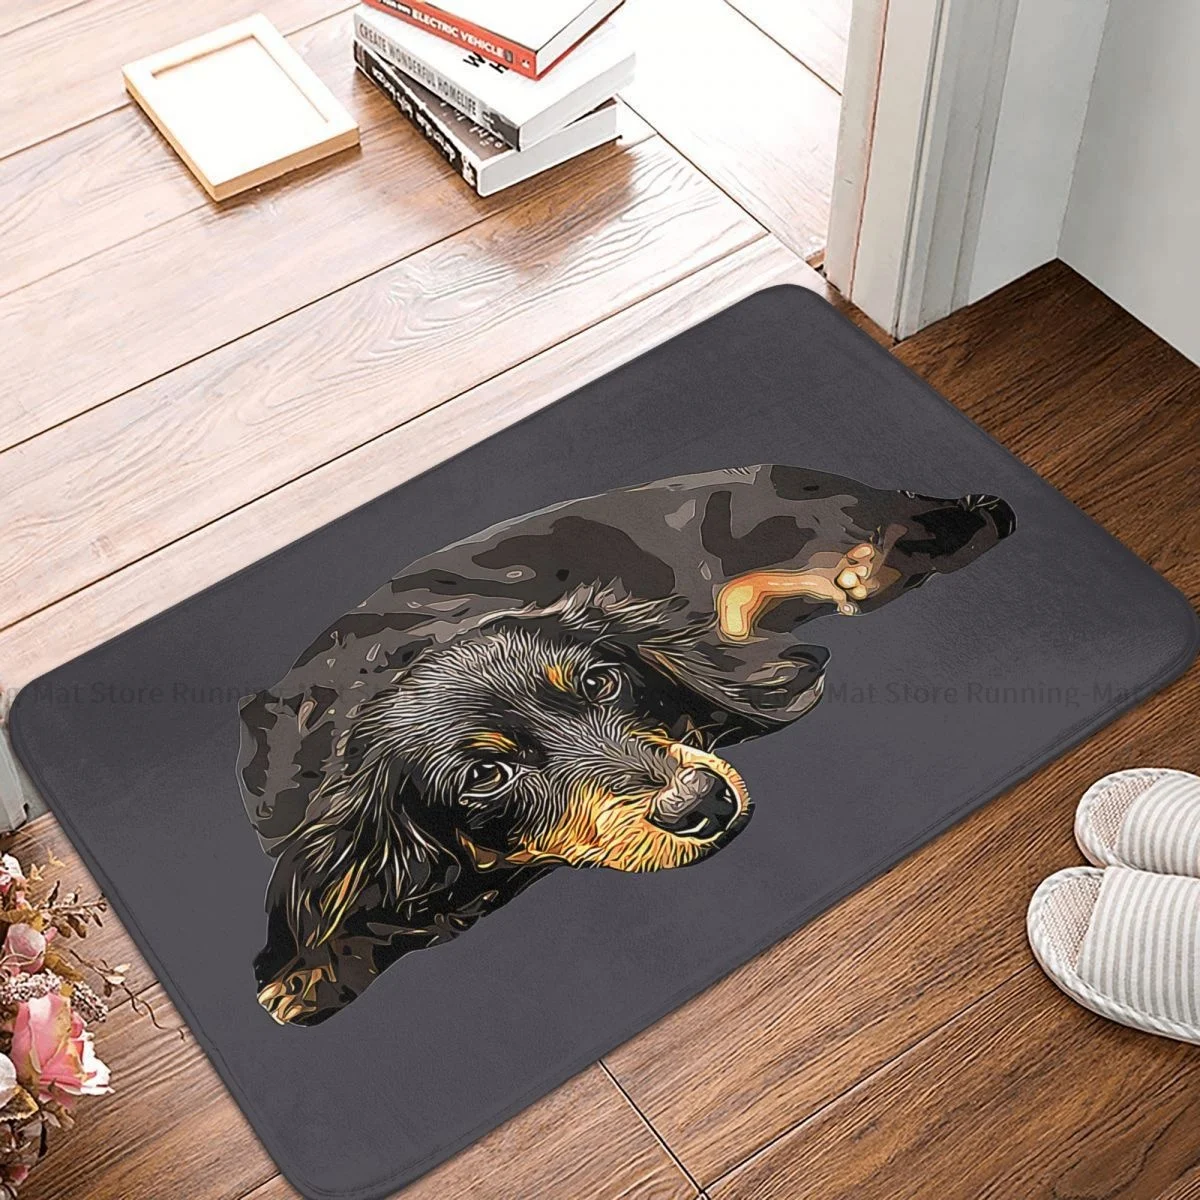 

Dachshund Pet Dog Bedroom Mat Long Haired Black Tan Miniature Doormat Kitchen Carpet Entrance Door Rug Home Decor